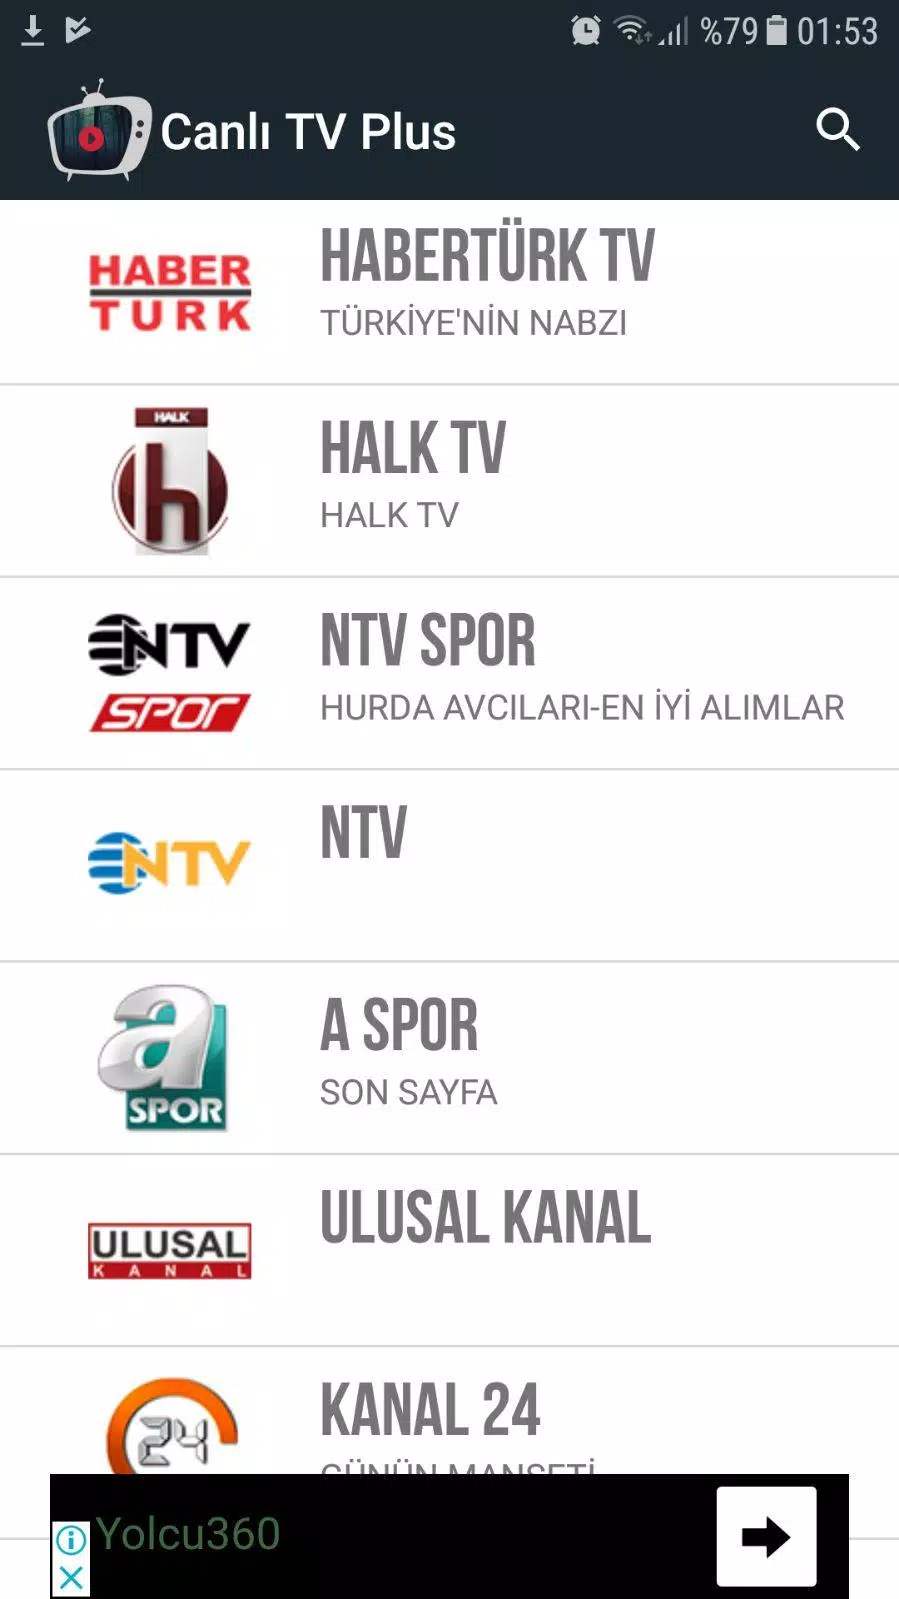 Canlı Tv izle - Bedava Tv izle APK für Android herunterladen